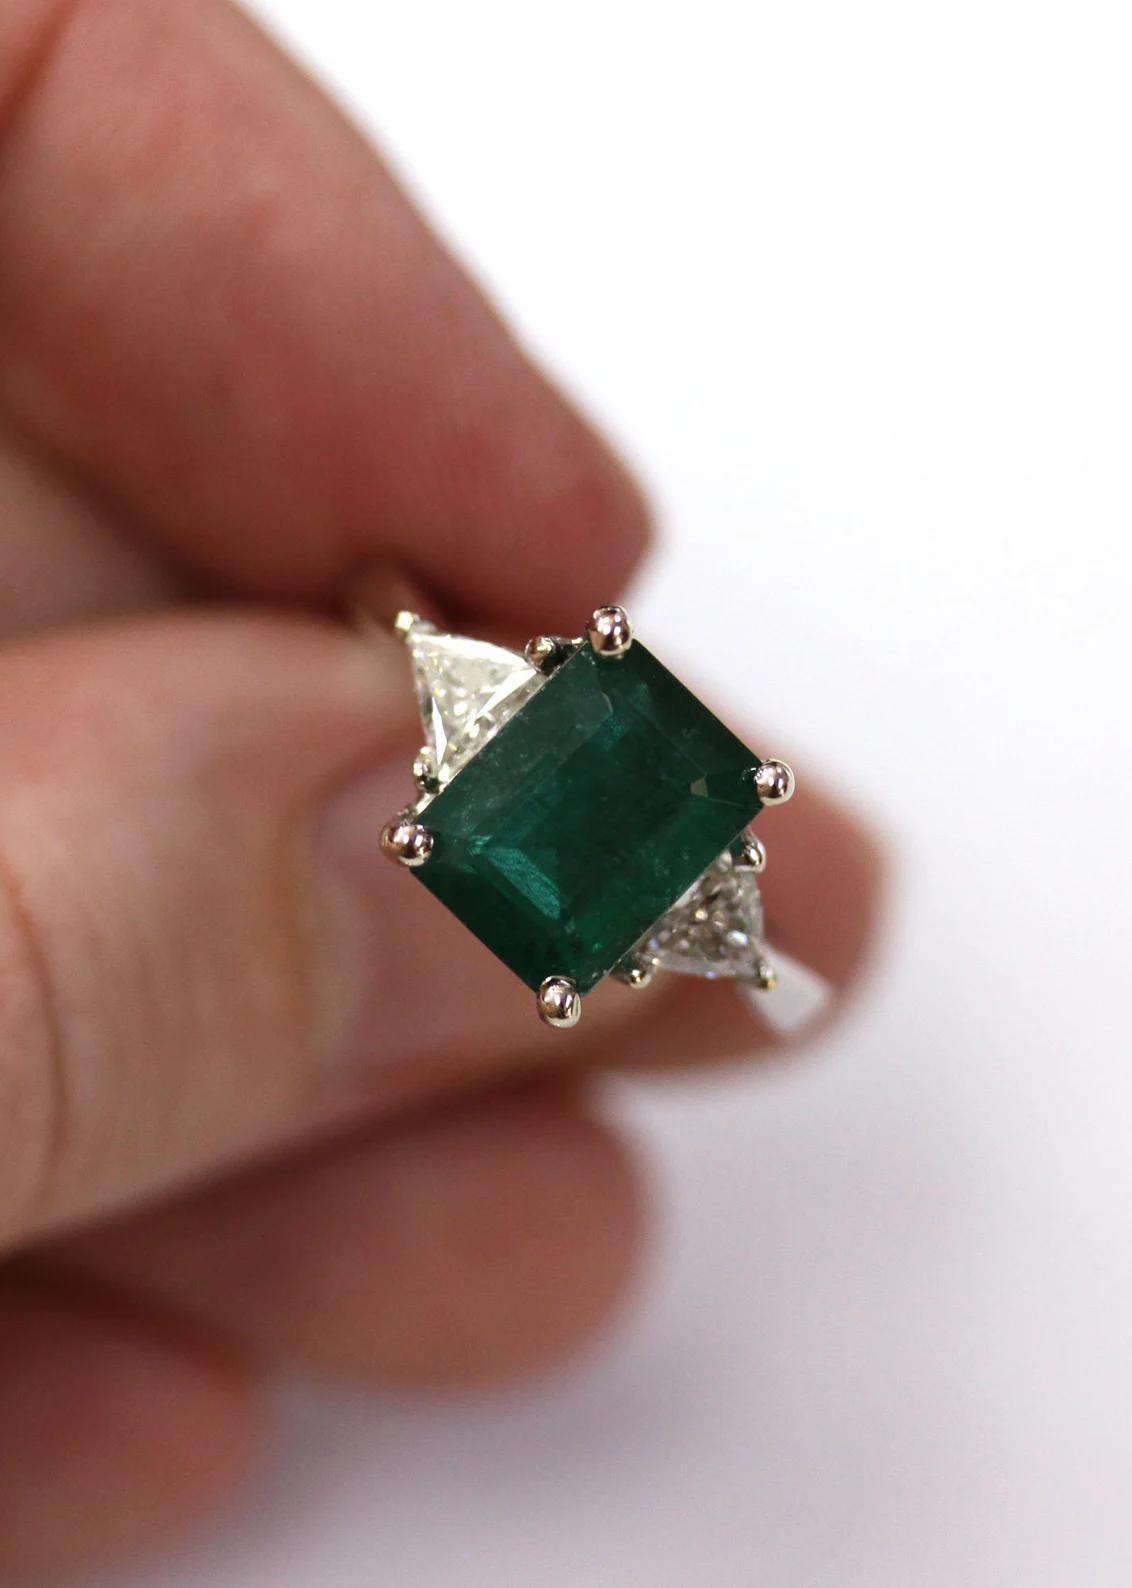 Natural Tree Stones Green Emerald Diamond Engagement Ring